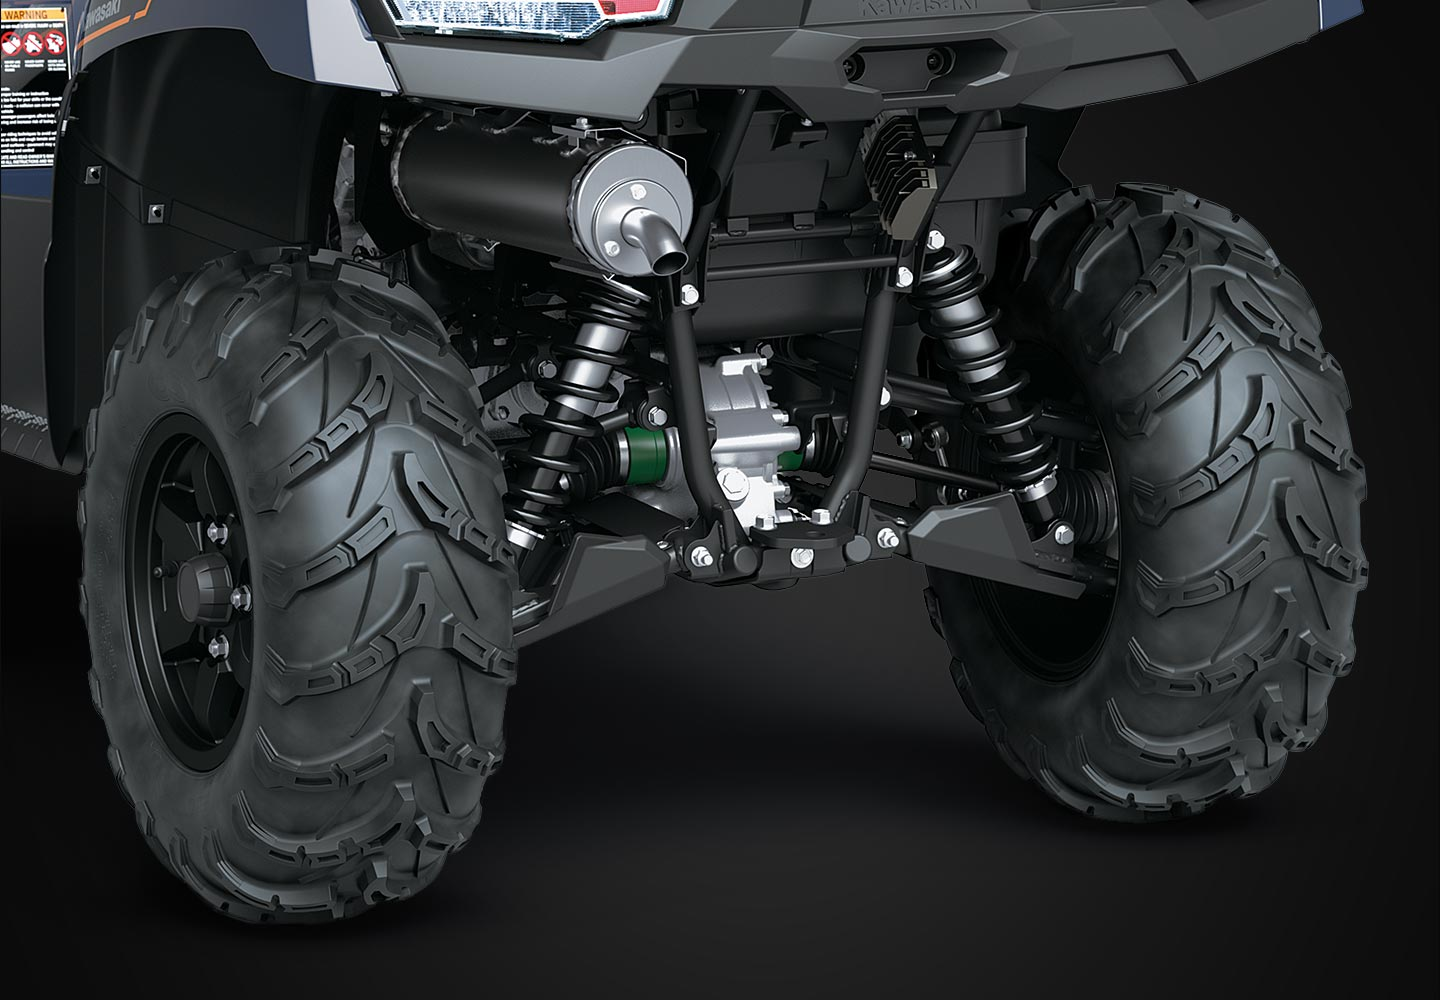 Kawasaki Brute Force® 750 | ATV | Challenge Accepted